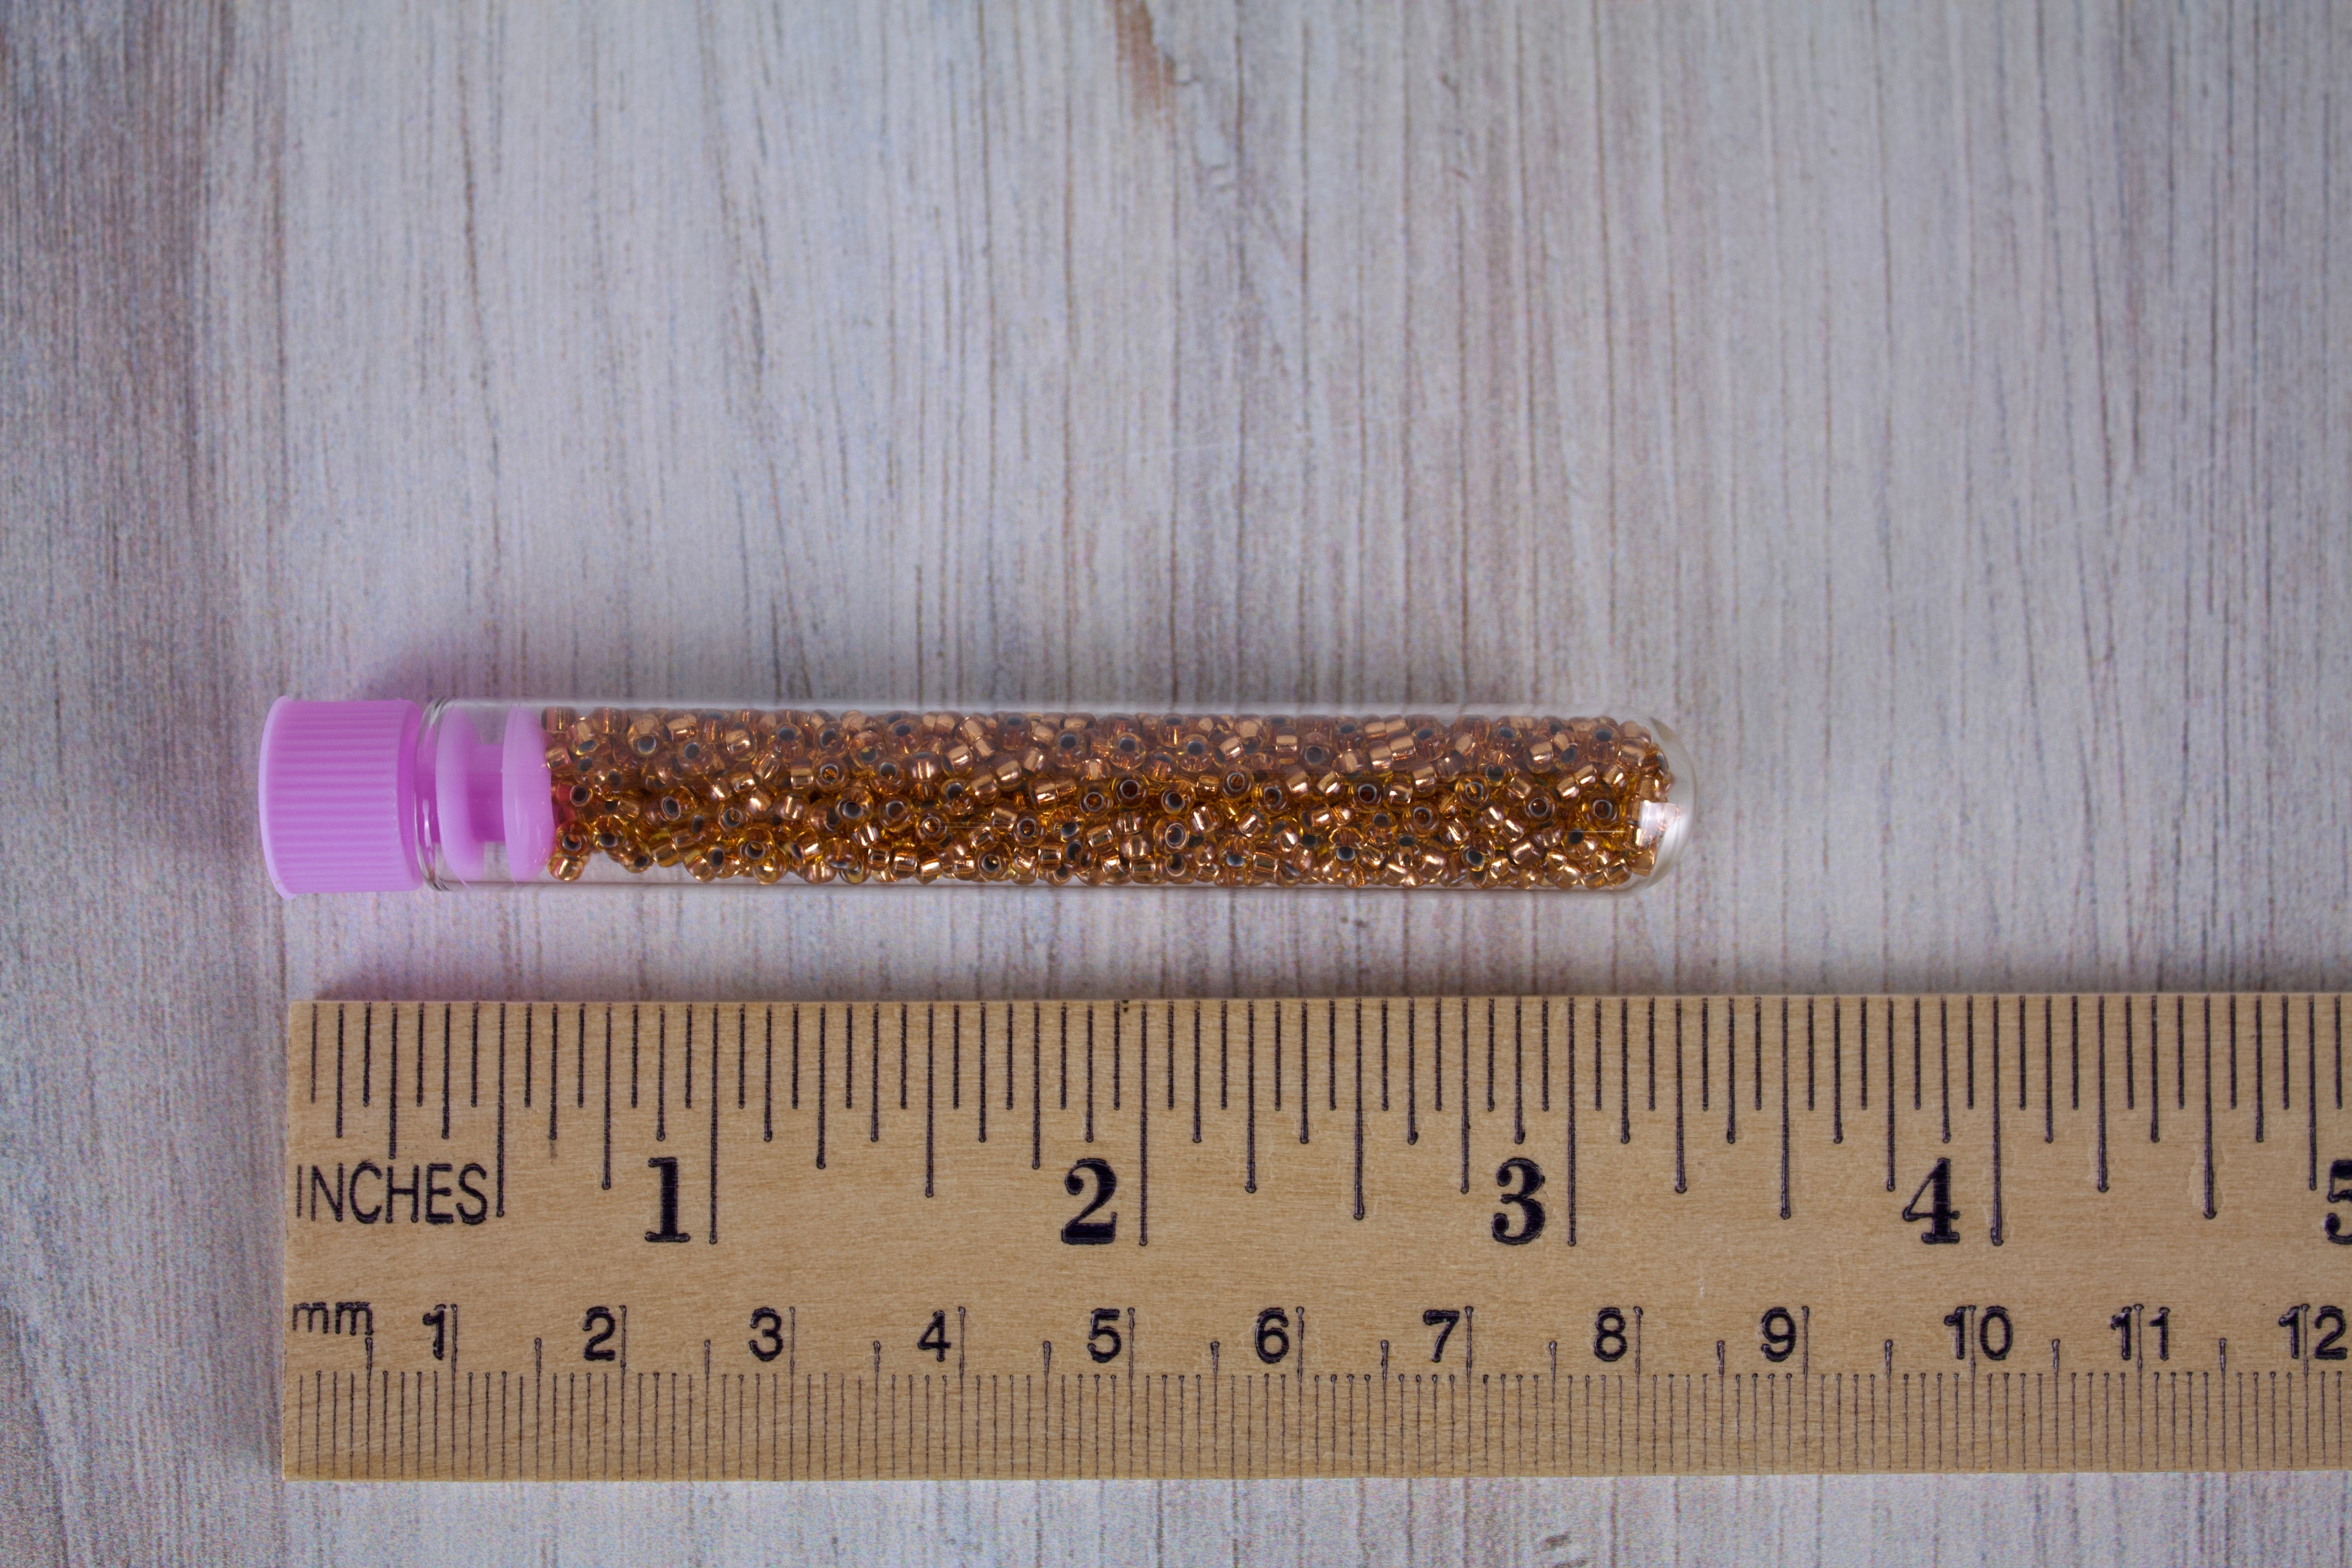 Copper Lined Pale Amber Miyuki Seed Beads size 11